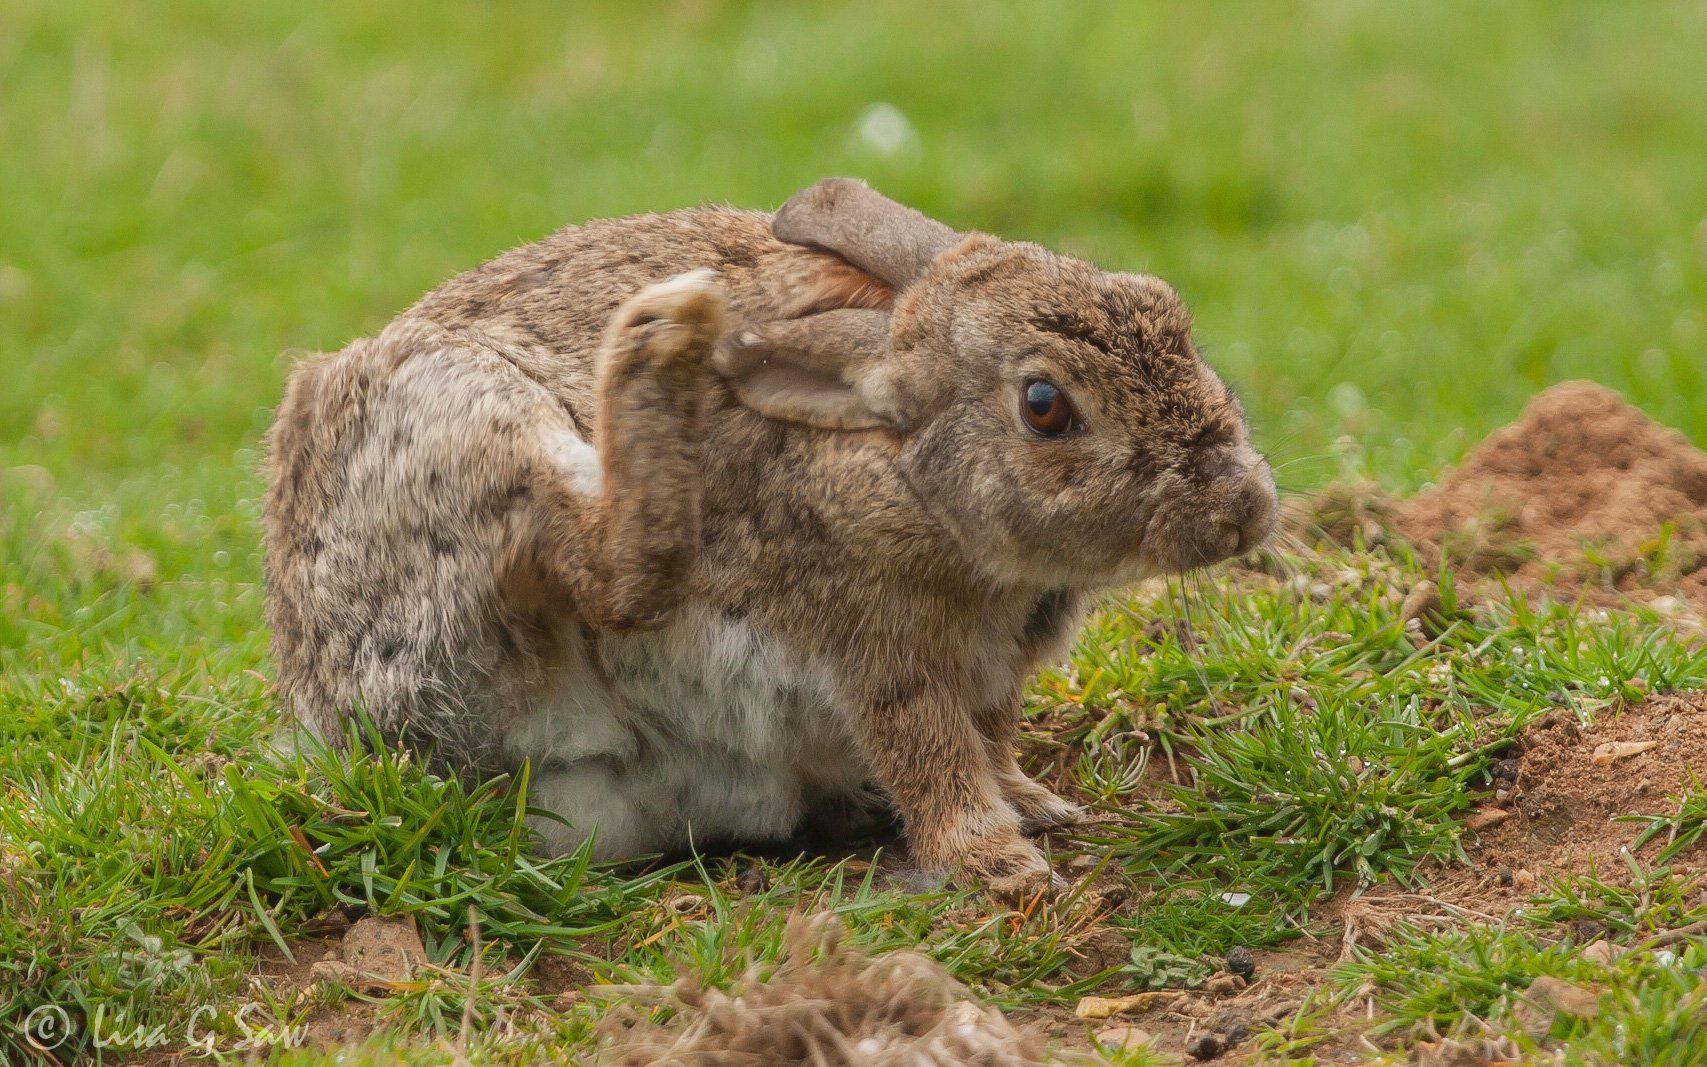 Rabbit using its leg to scratch itself